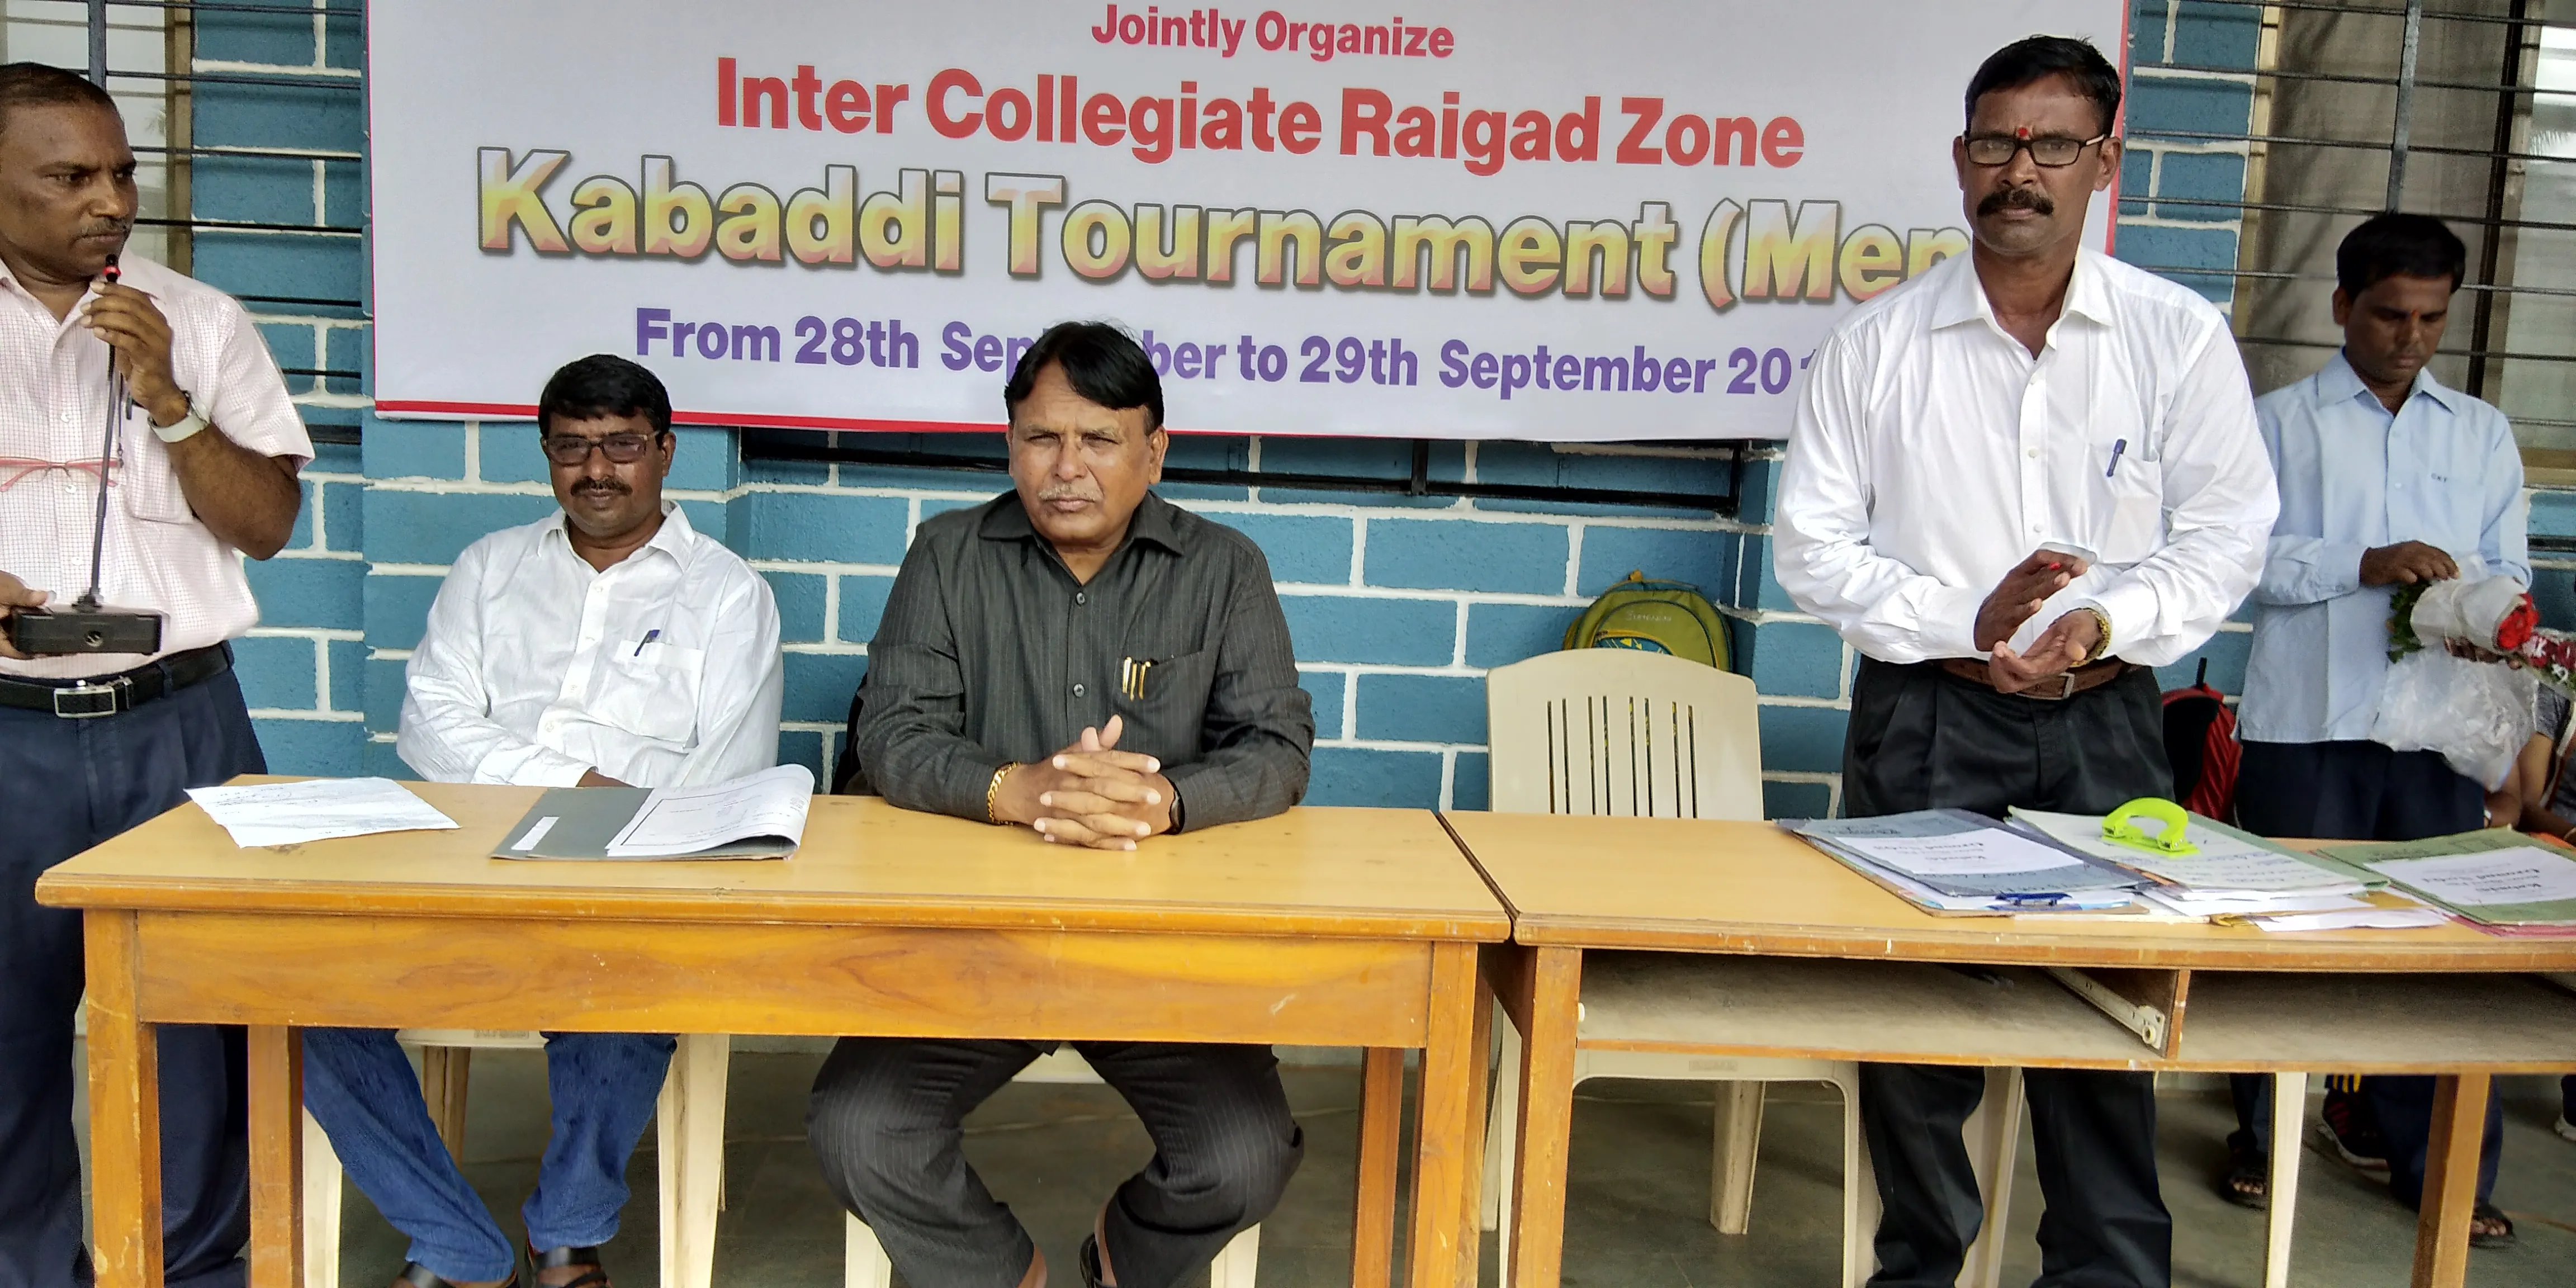 Organization of Intercollegiate Kabaddi Tournament 2017-18